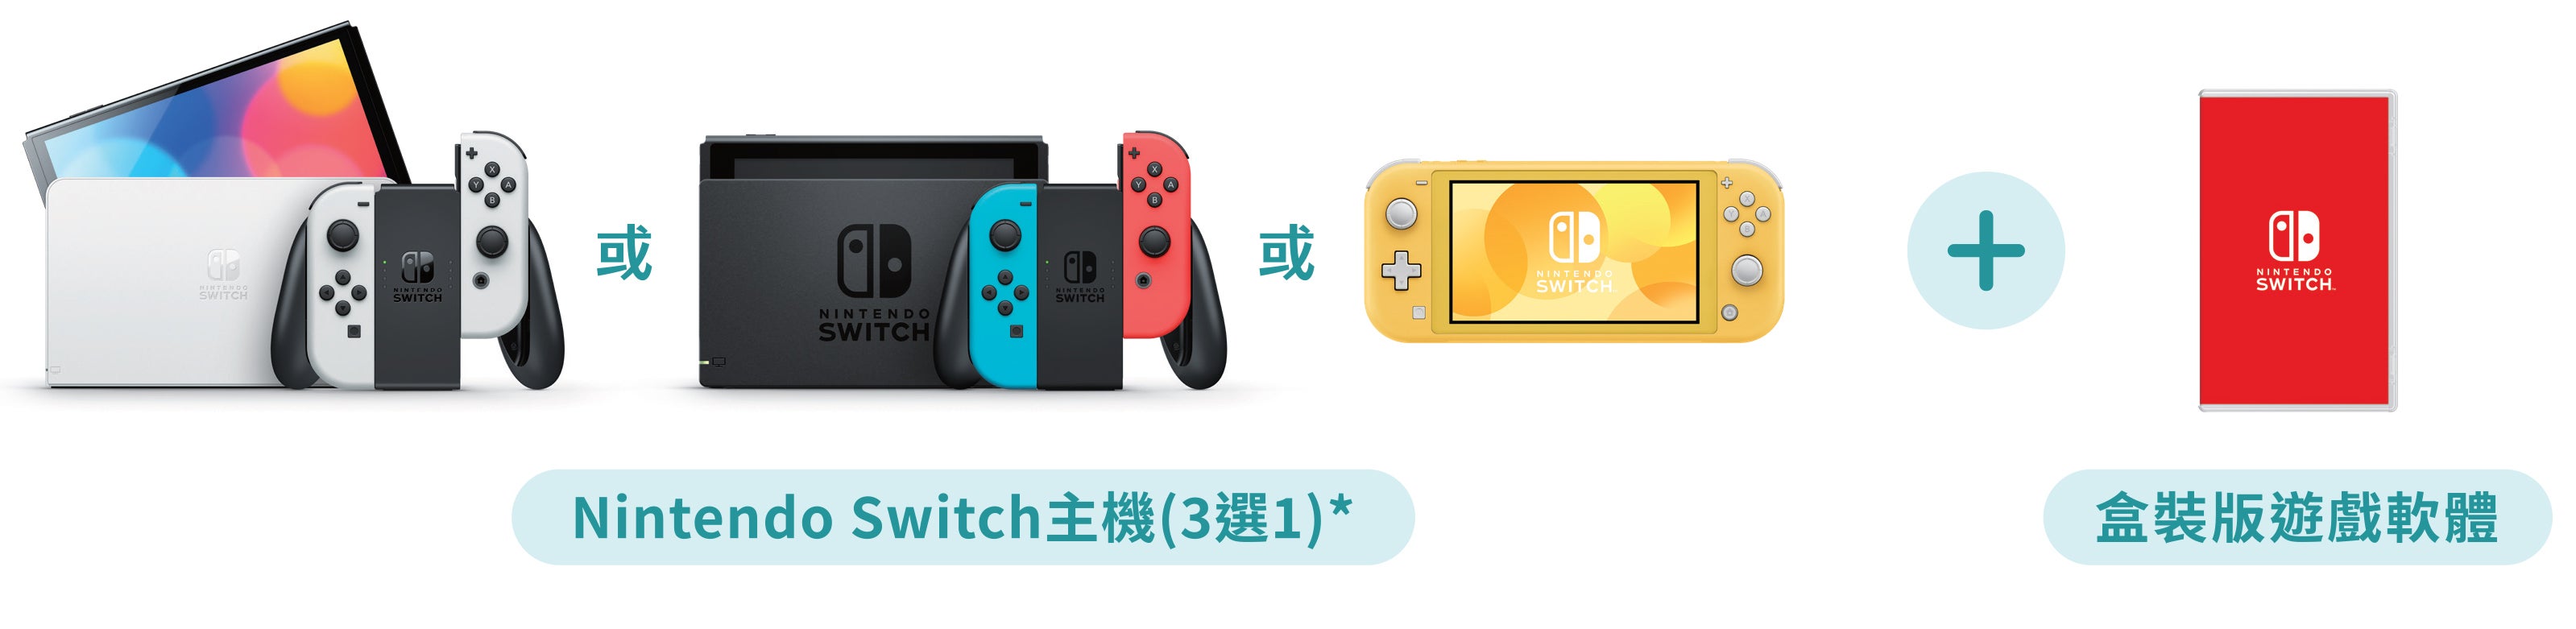 Nintendo Switch 2022年「冬季特典」活動於12月9日開始 9%title%